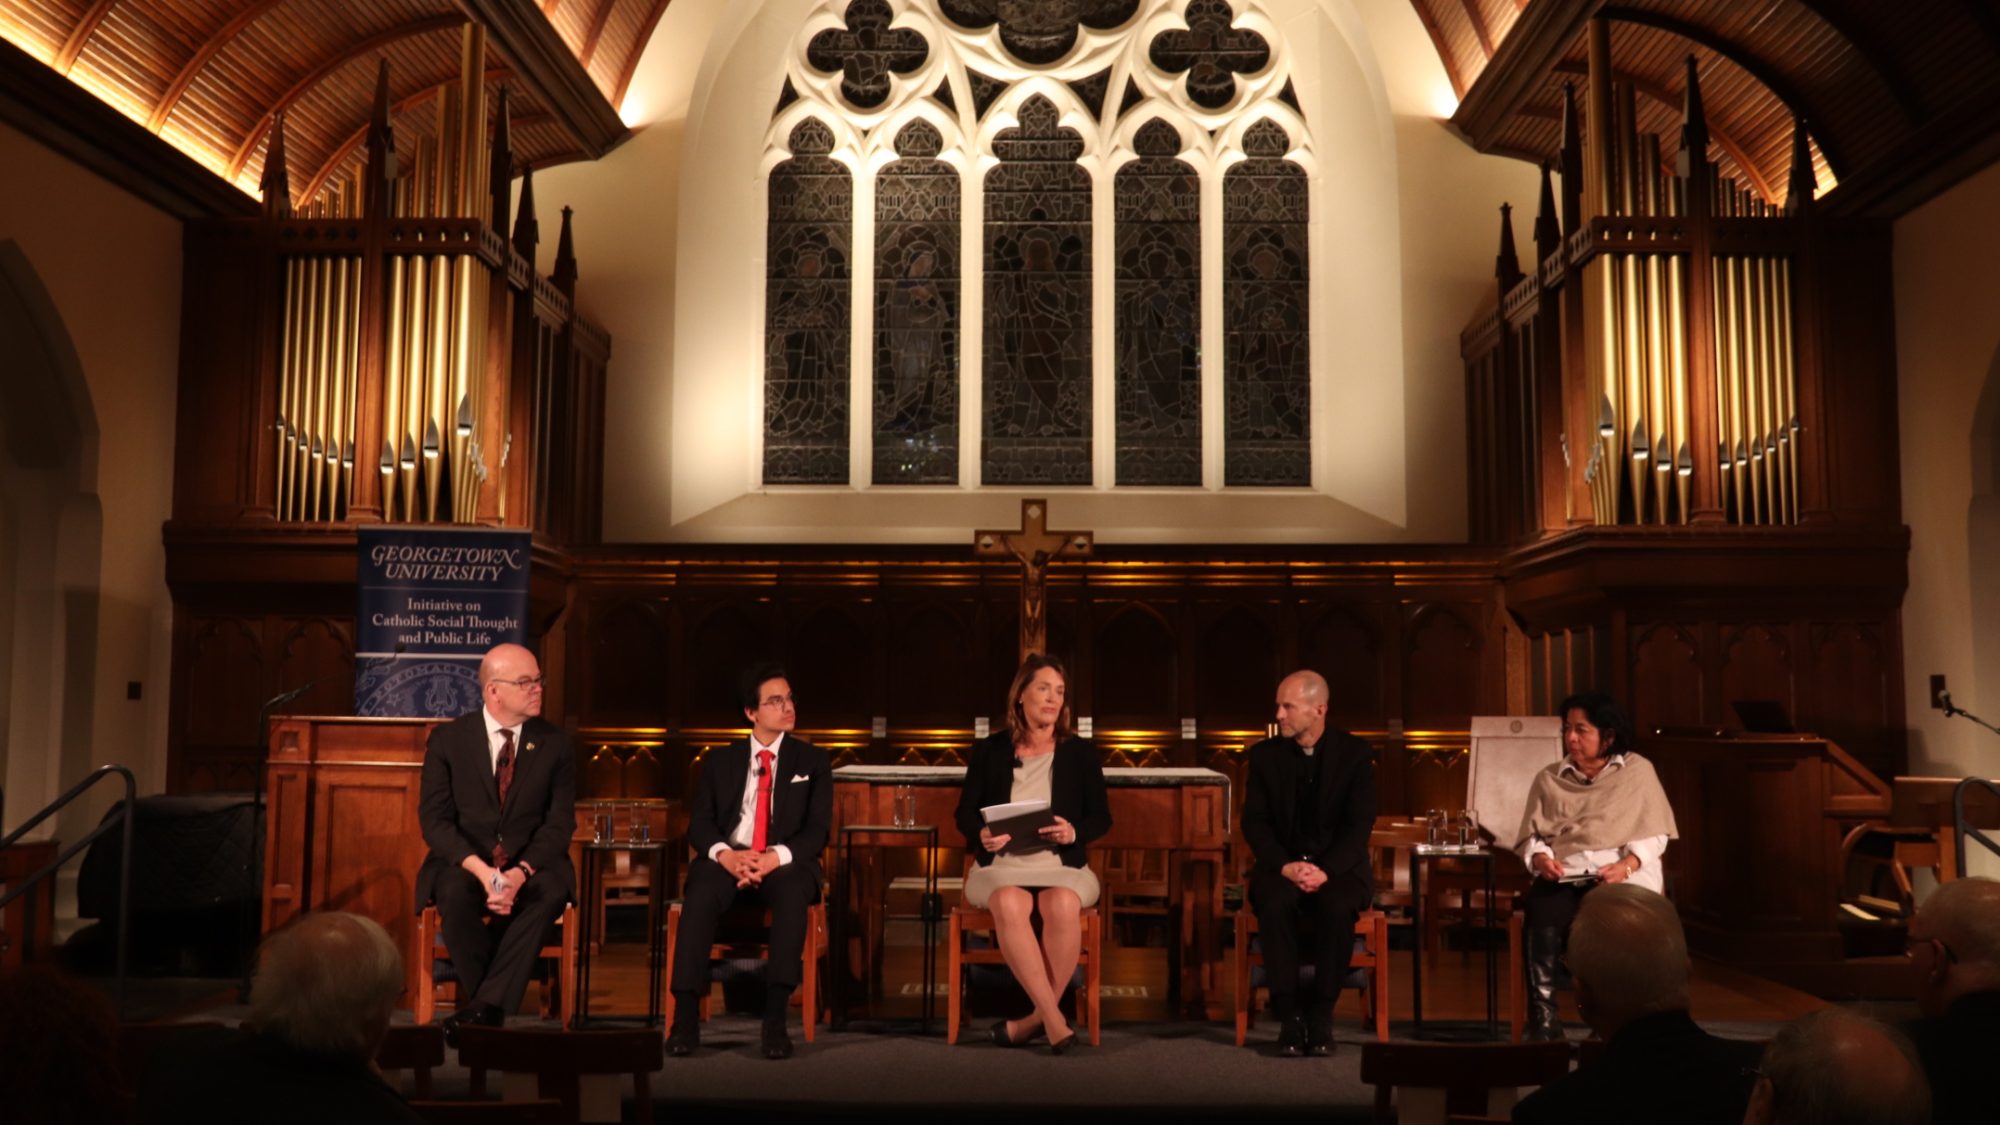 A panel of four people speak in a dimly lit chapel